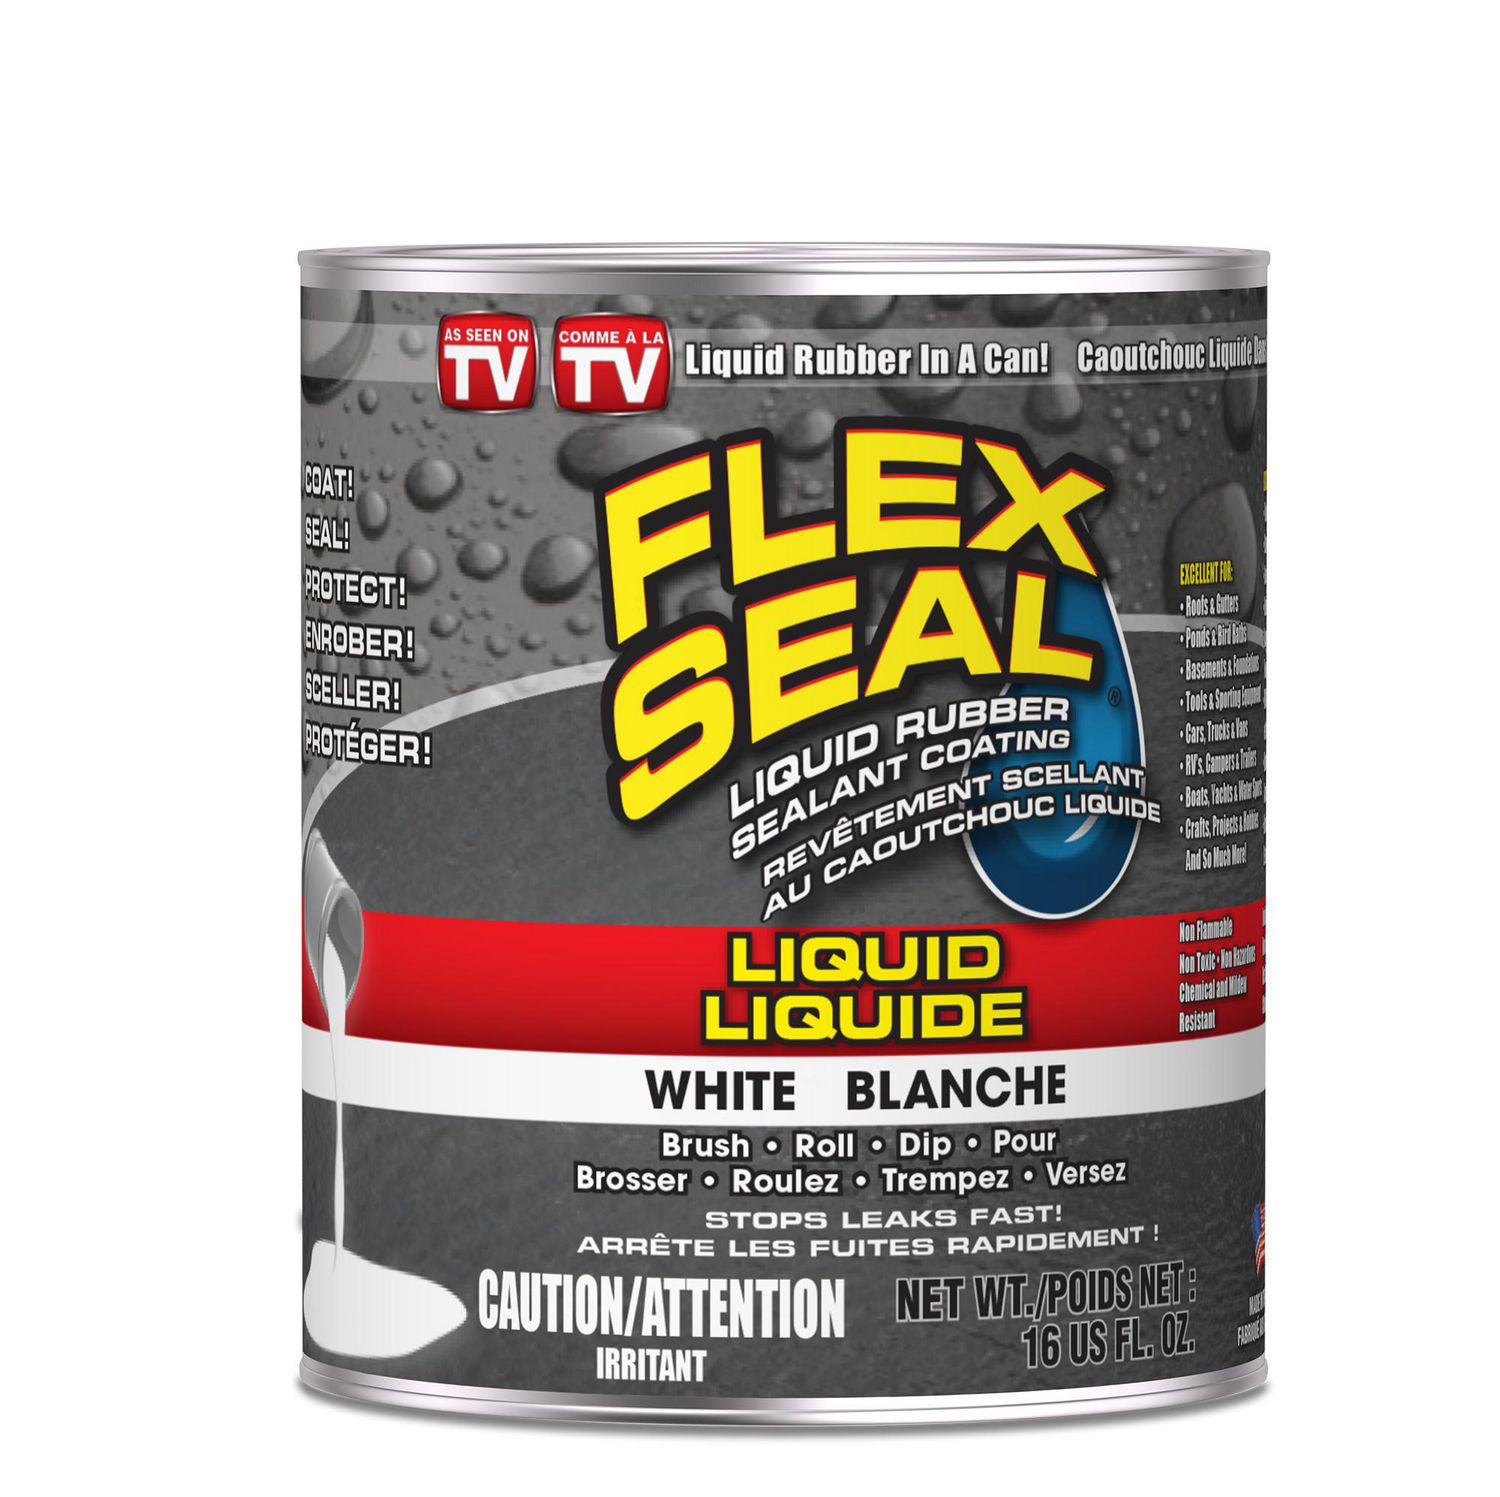 FLEX SEAL LIQUID WHITE 16 US LIQUID RUBBER SEALANT COATING, STOP  LEAKS FAST!